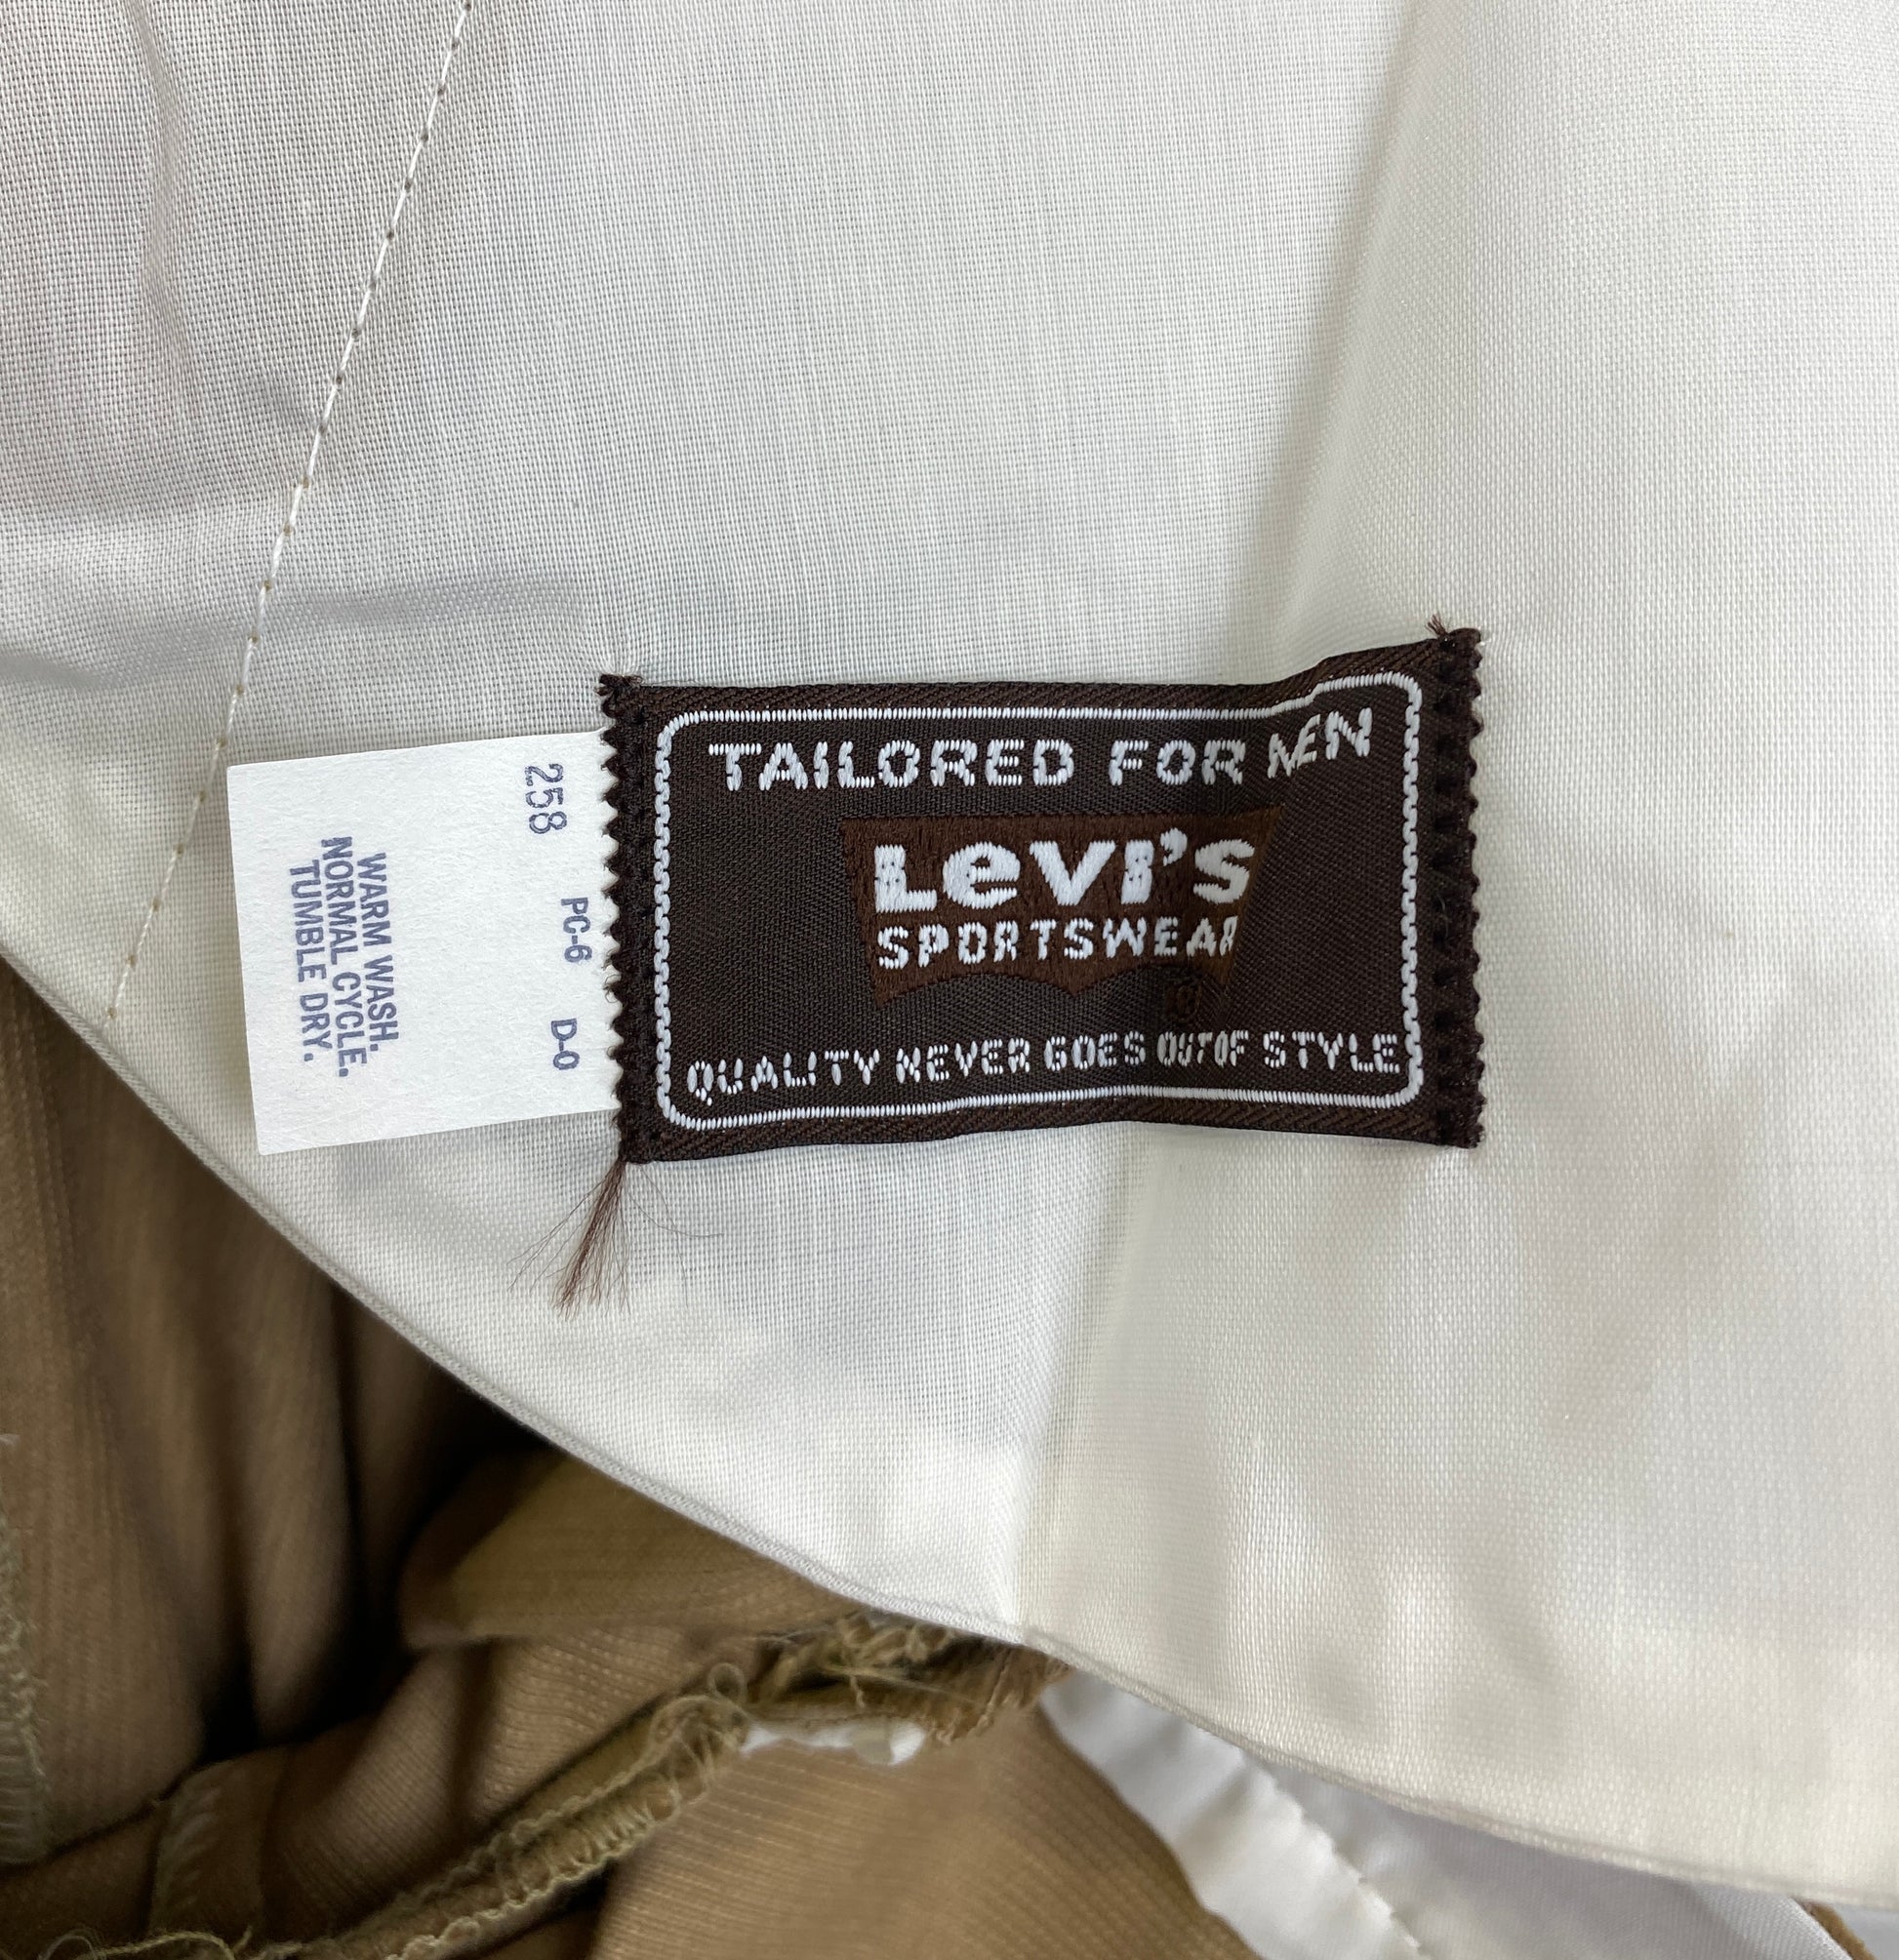 Vintage 1970s Deadstock Men's Flared Levi's Tan-Brown Corduroy Pants, NOS